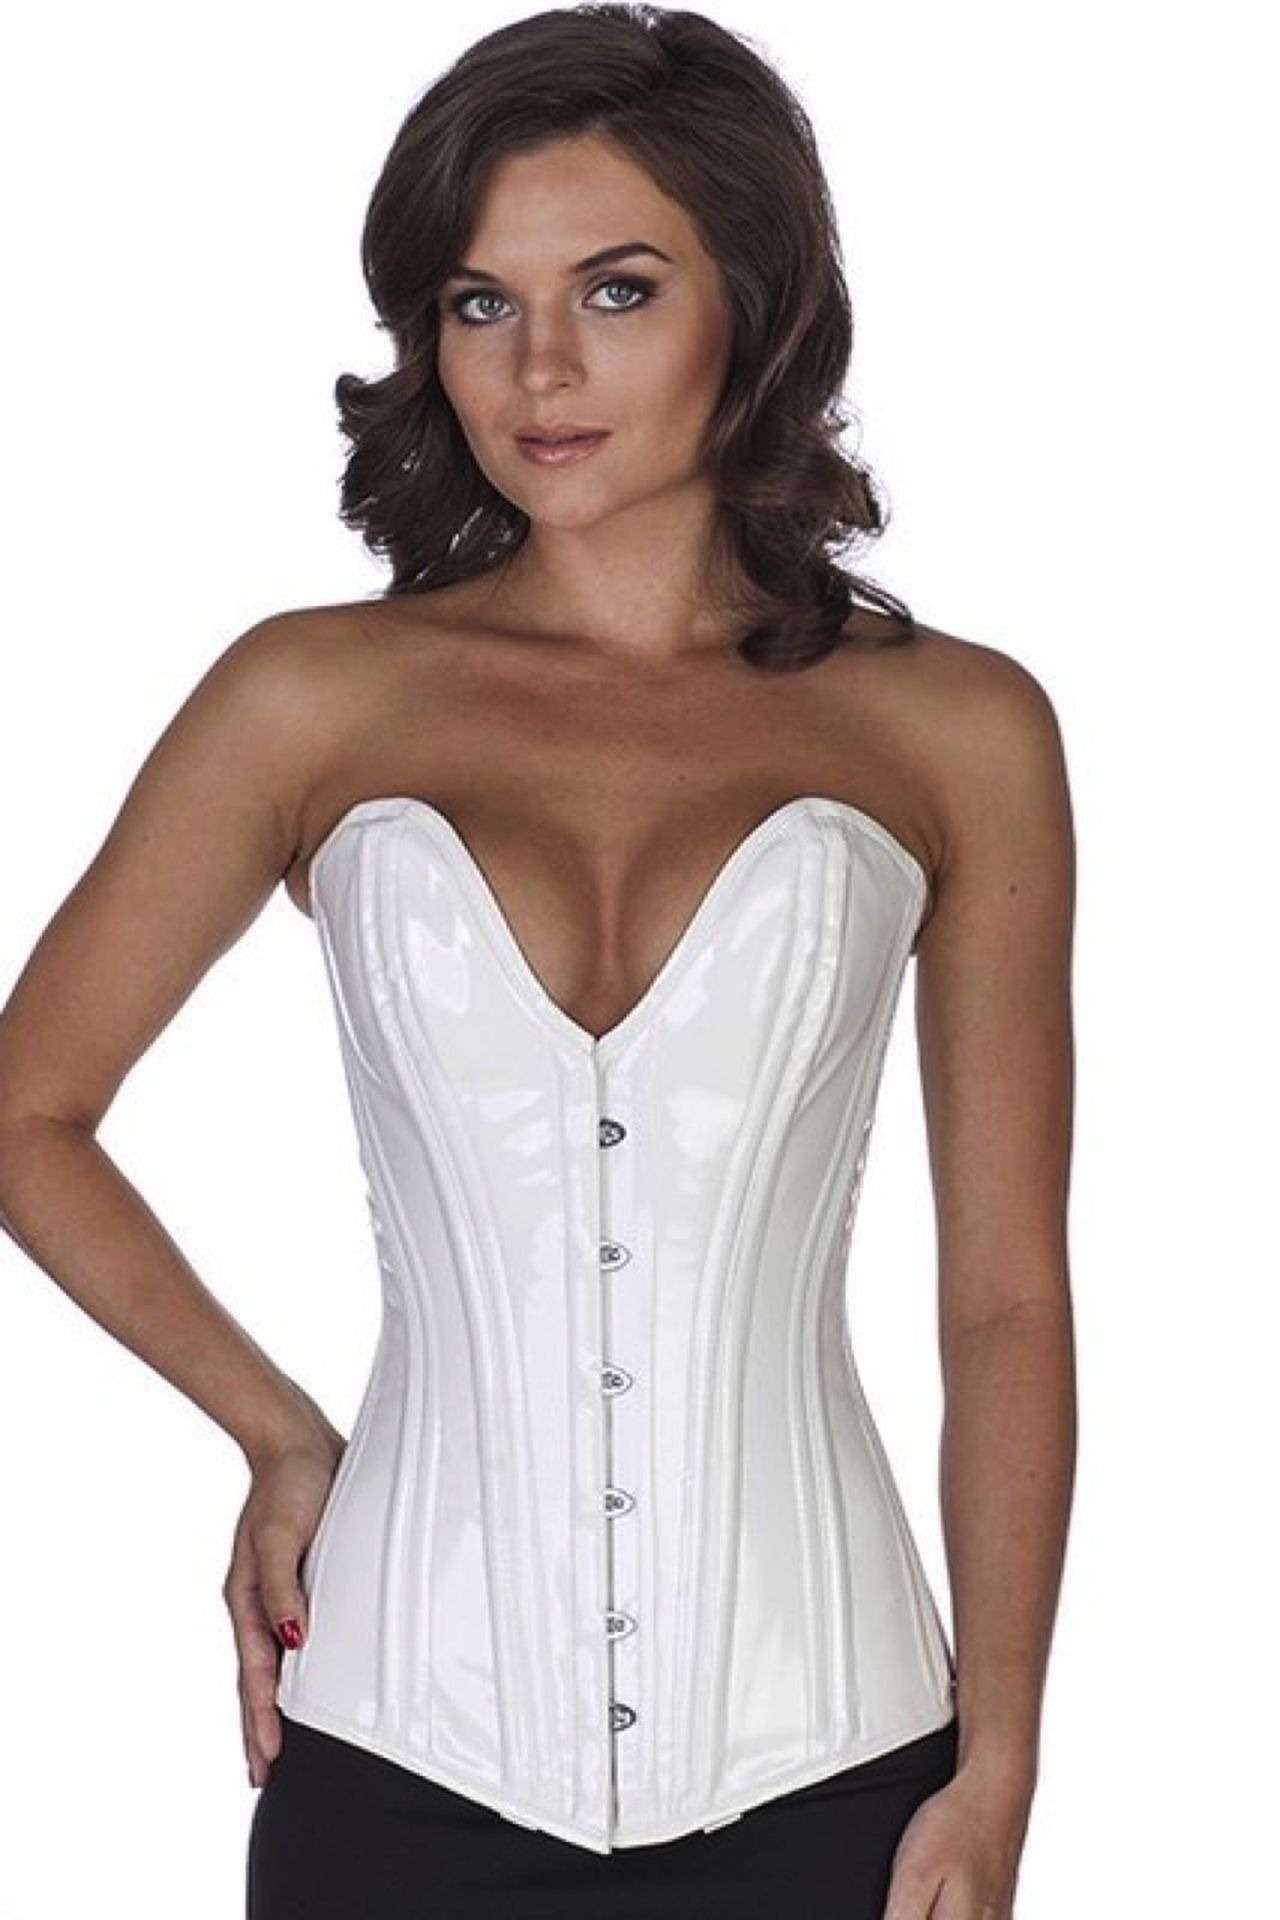 Corset white vinyl overbust plunge corset pl76